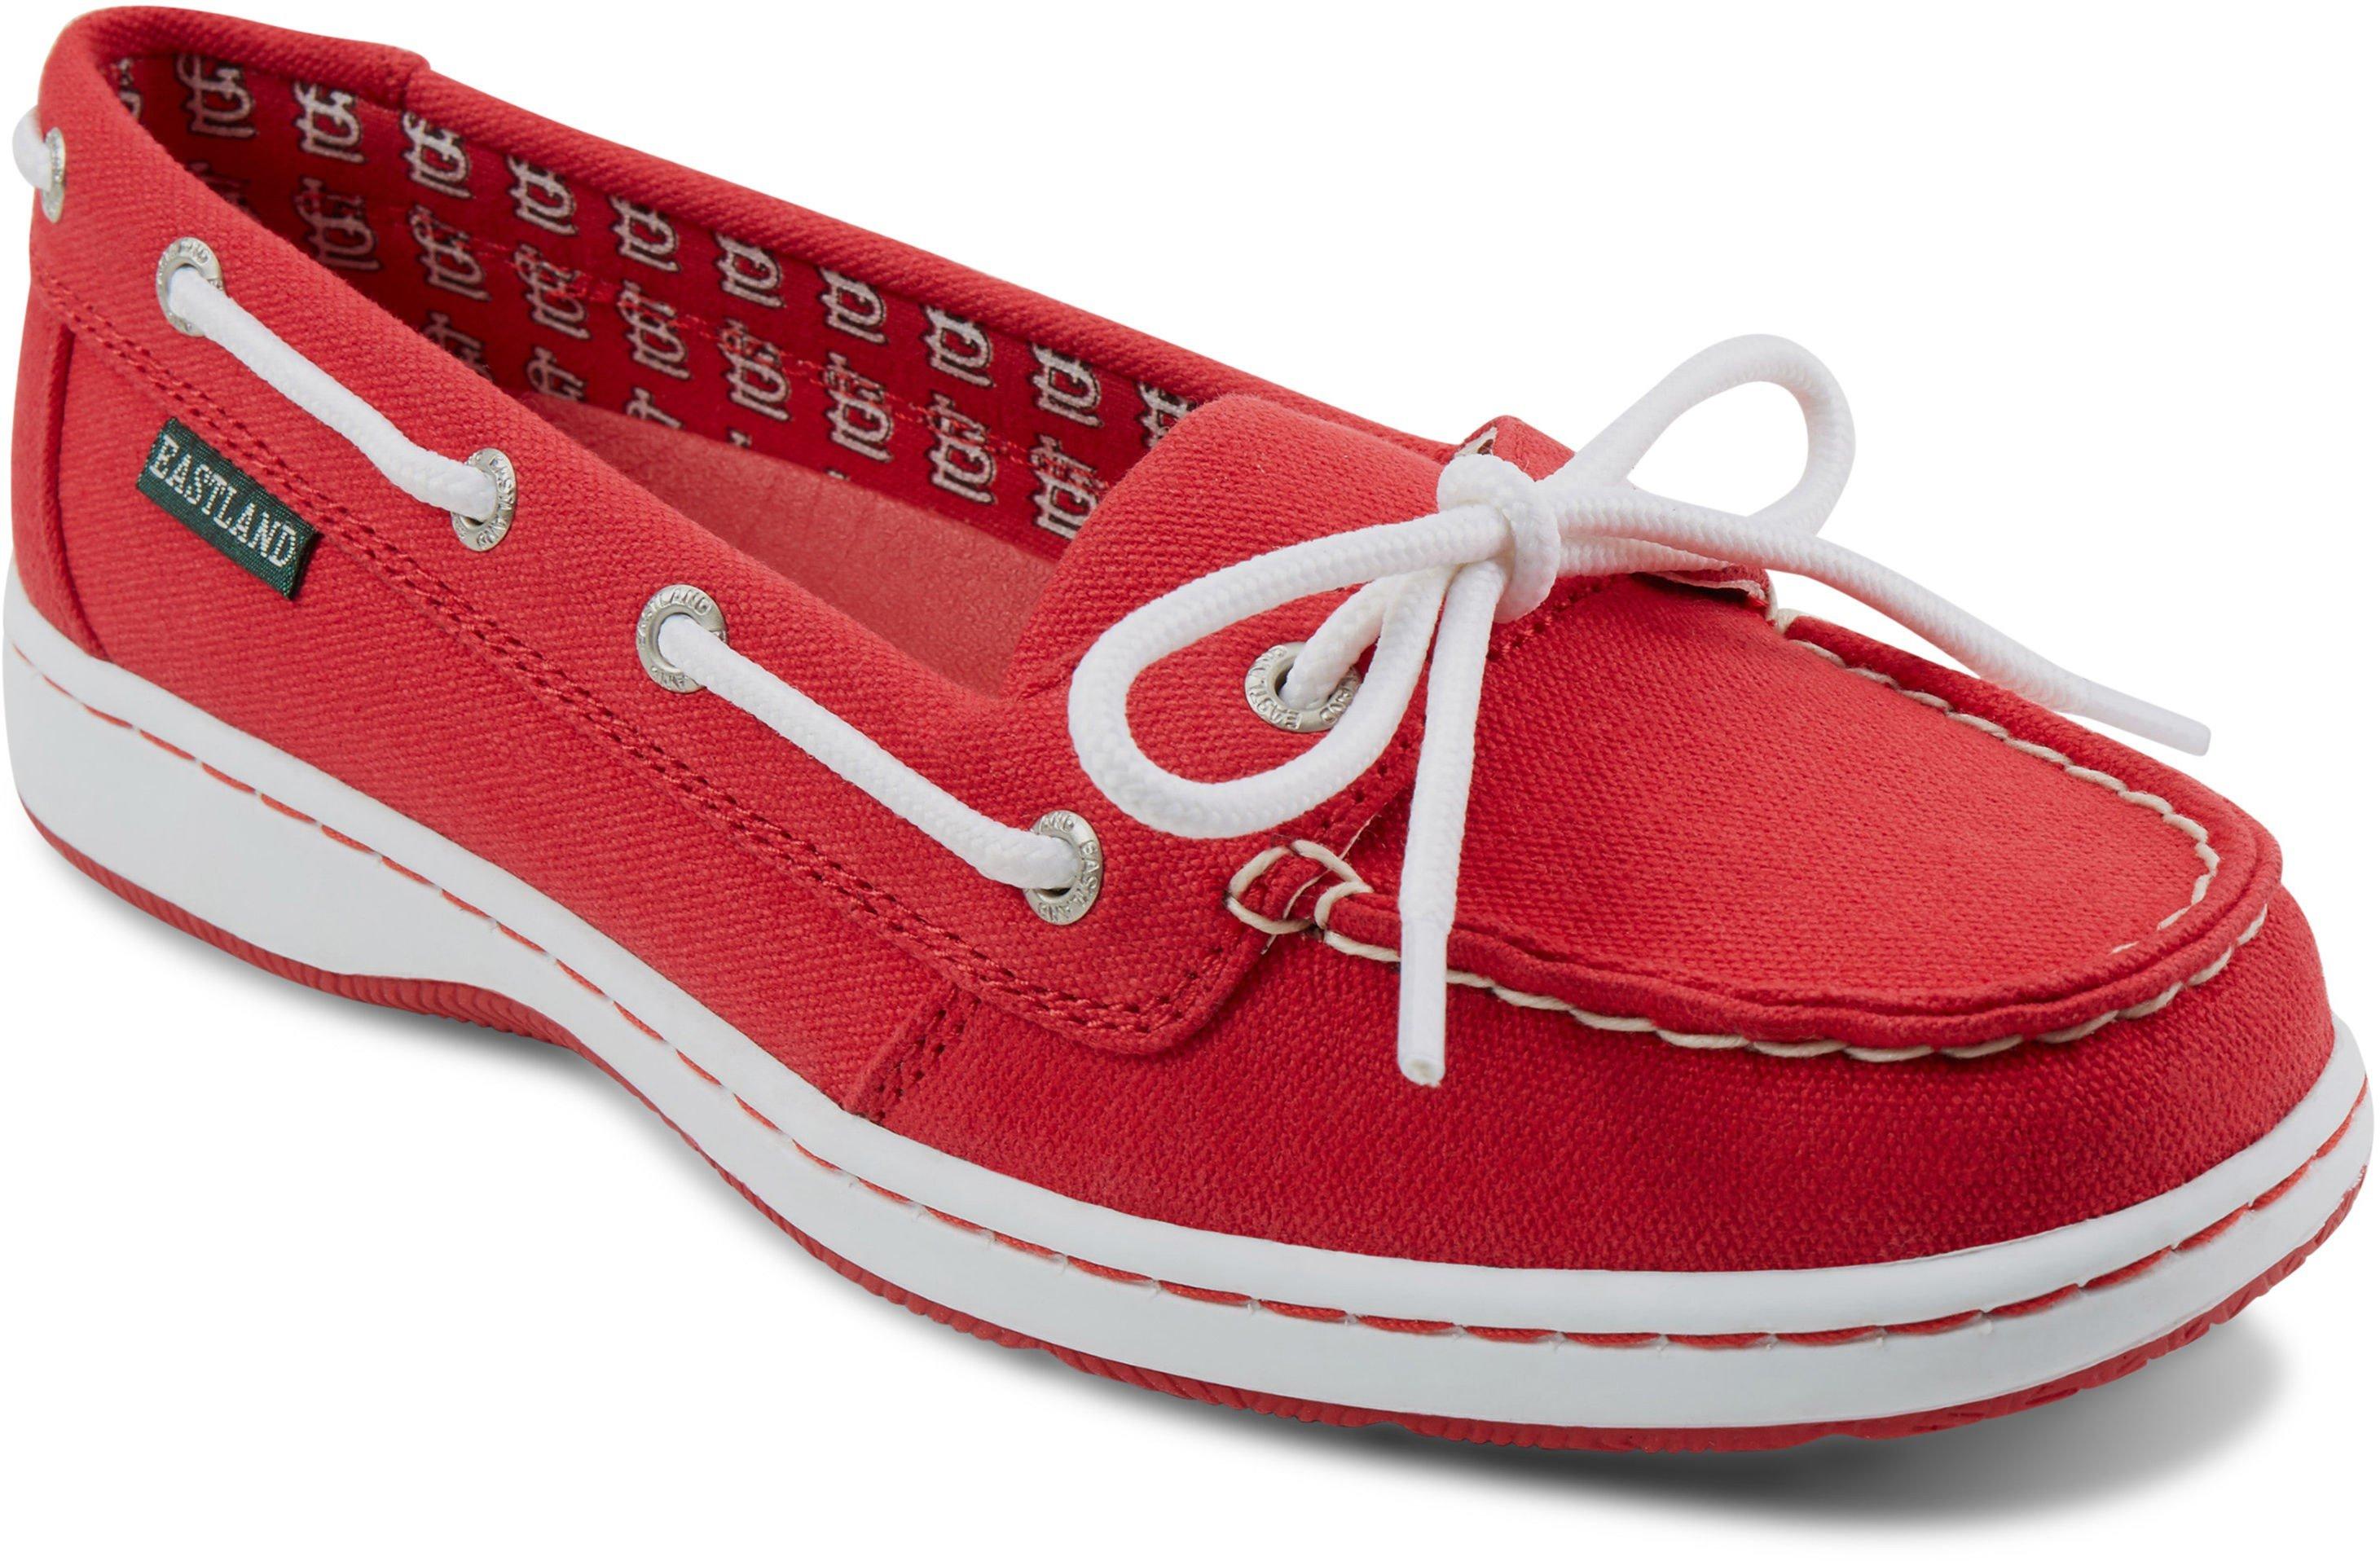 St. Louis Cardinals Womens Boat Shoes